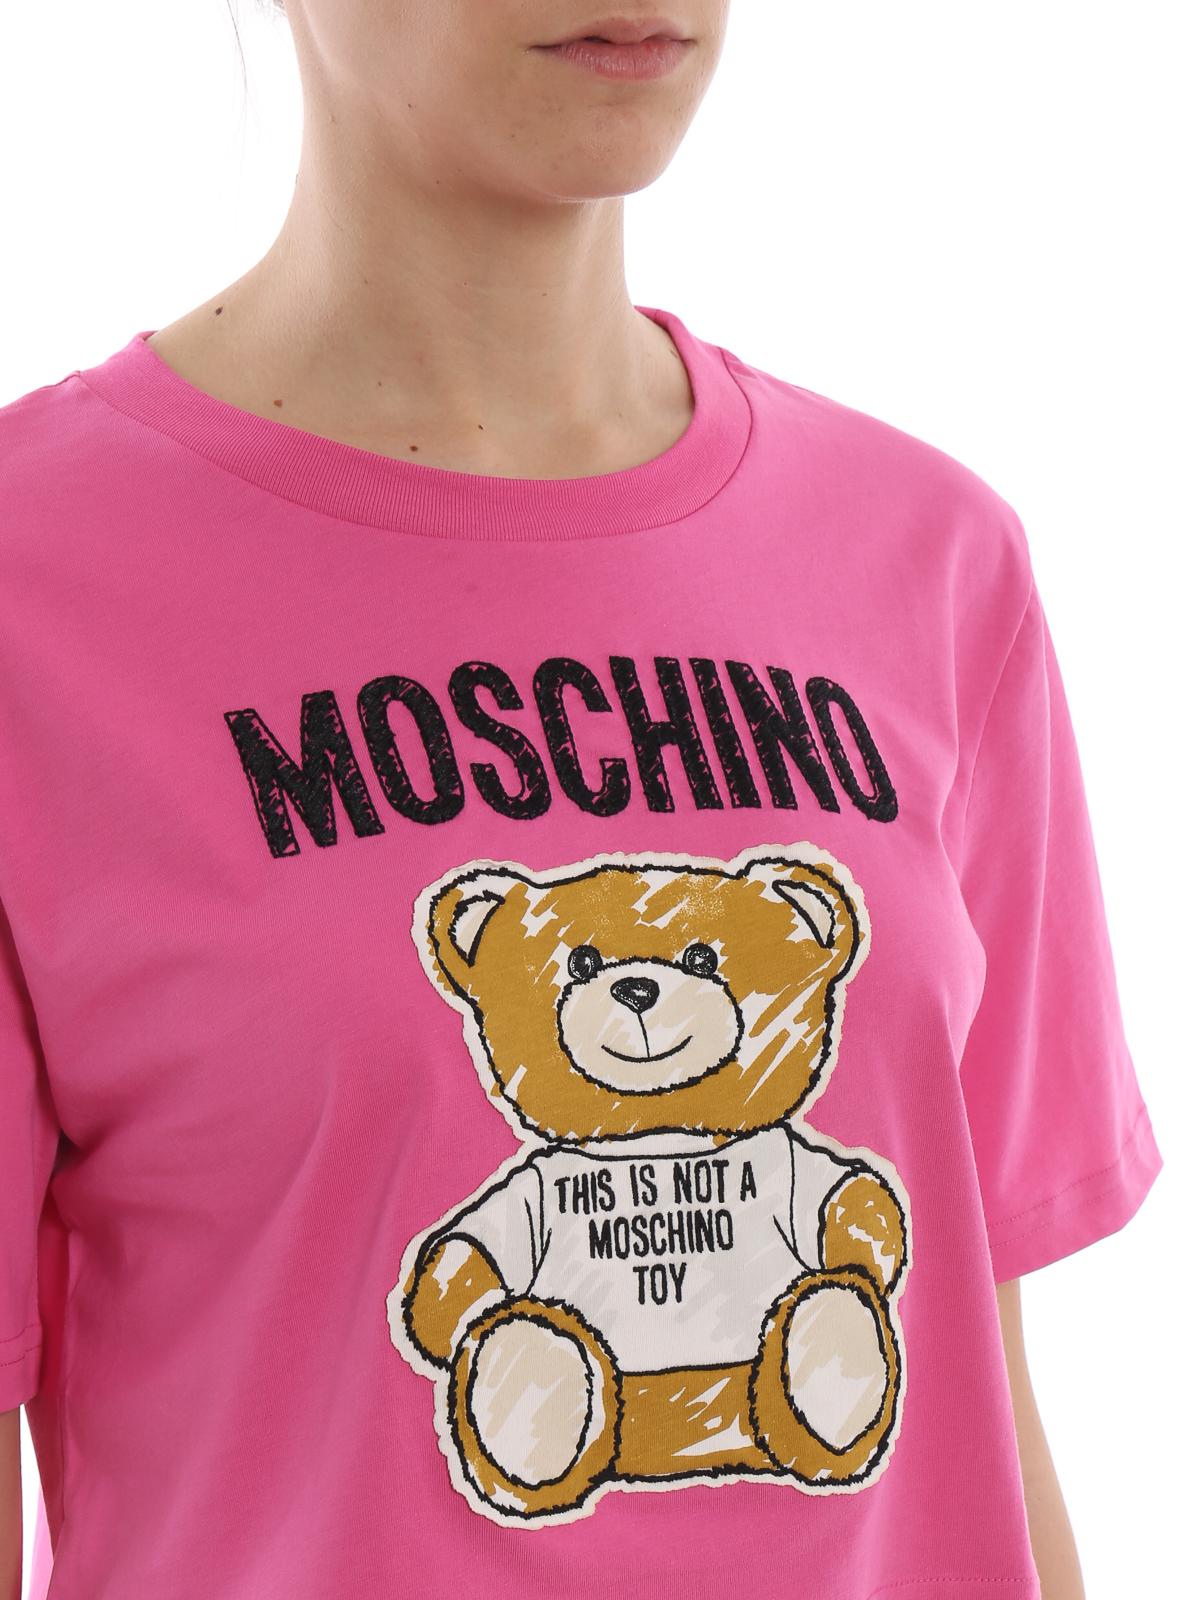 Moschino Cotton Teddy Bear Patch Fuchsia Crop T-shirt in Pink - Lyst